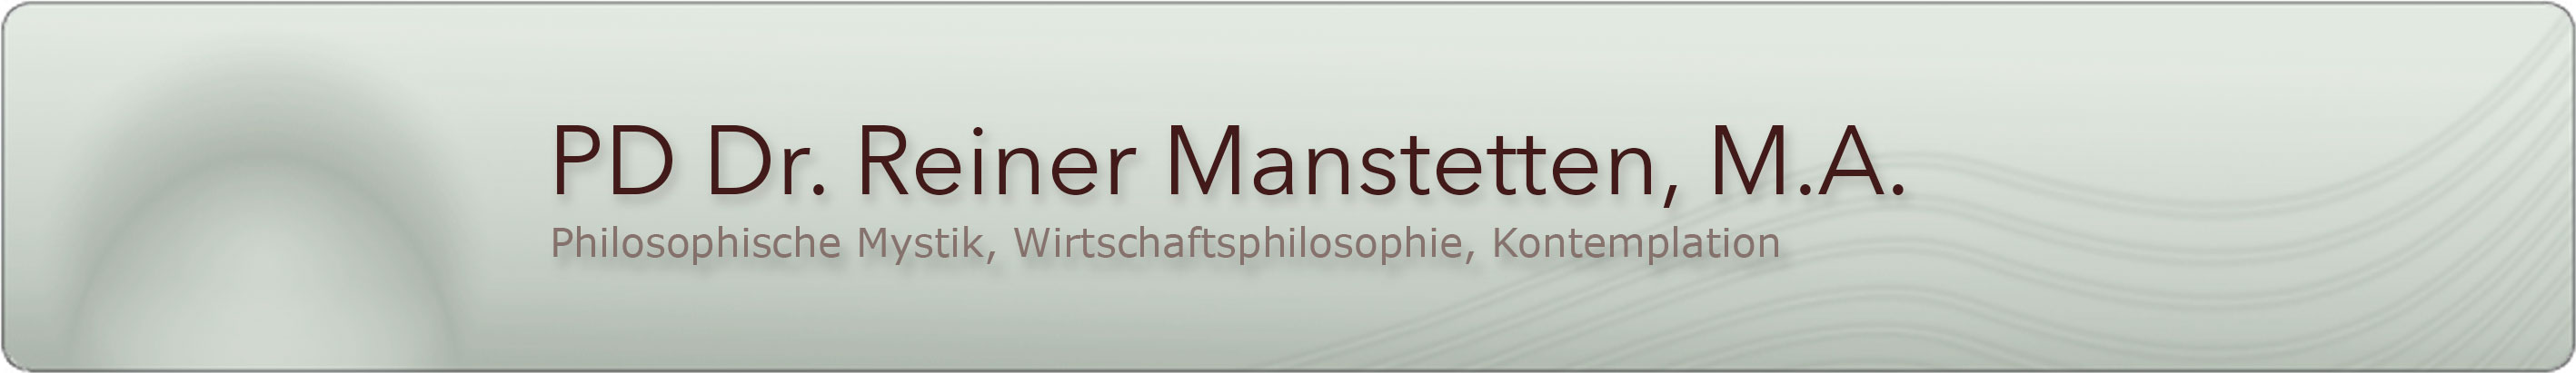 PD Dr. Reiner Manstetten, M.A. - Website Banner